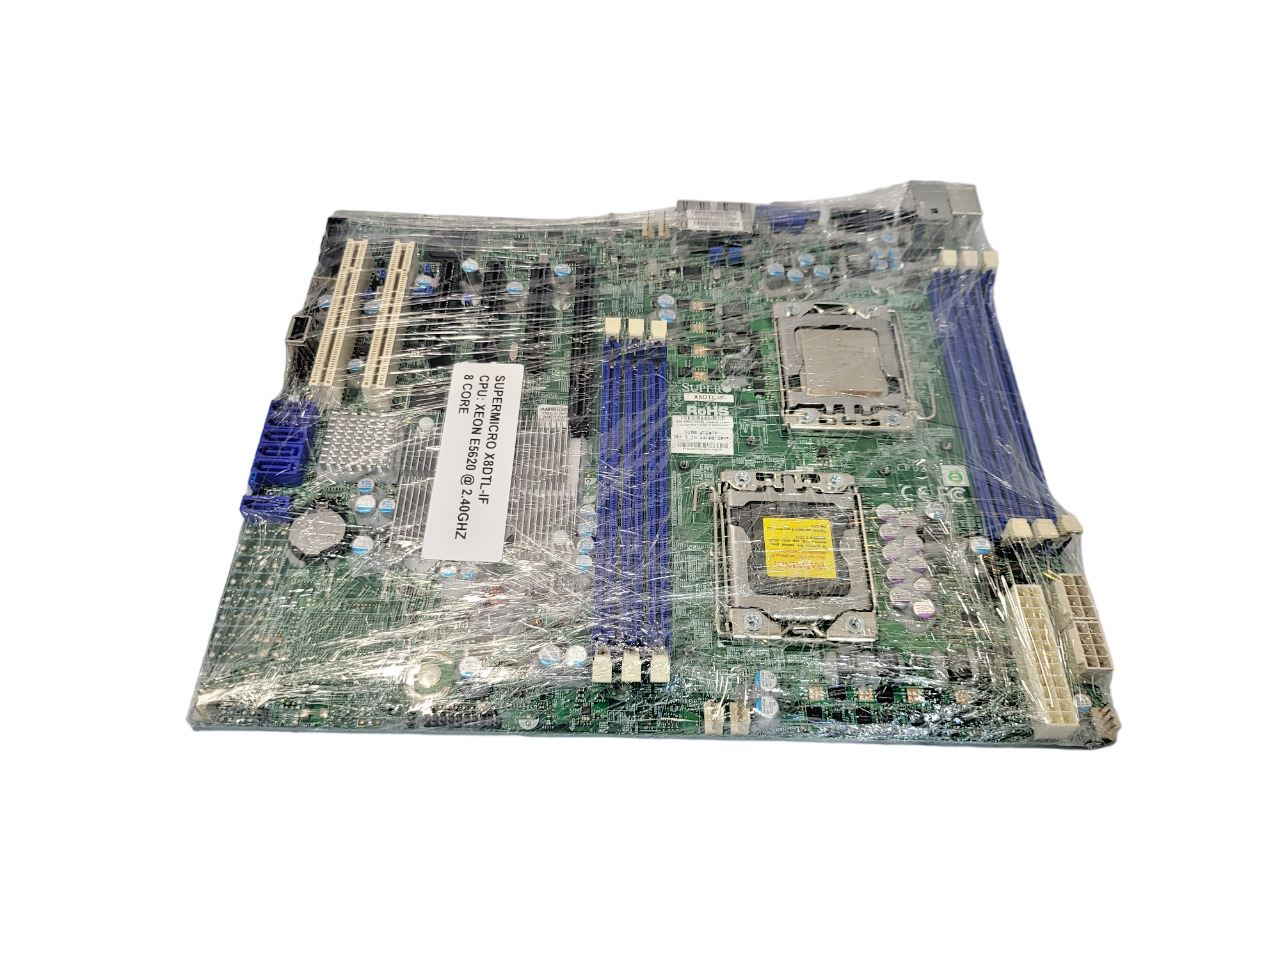 Motherboard Dual CPU Combo Server Supermicro X8DTL-iF 8Core Xeon E5620 LGA1366